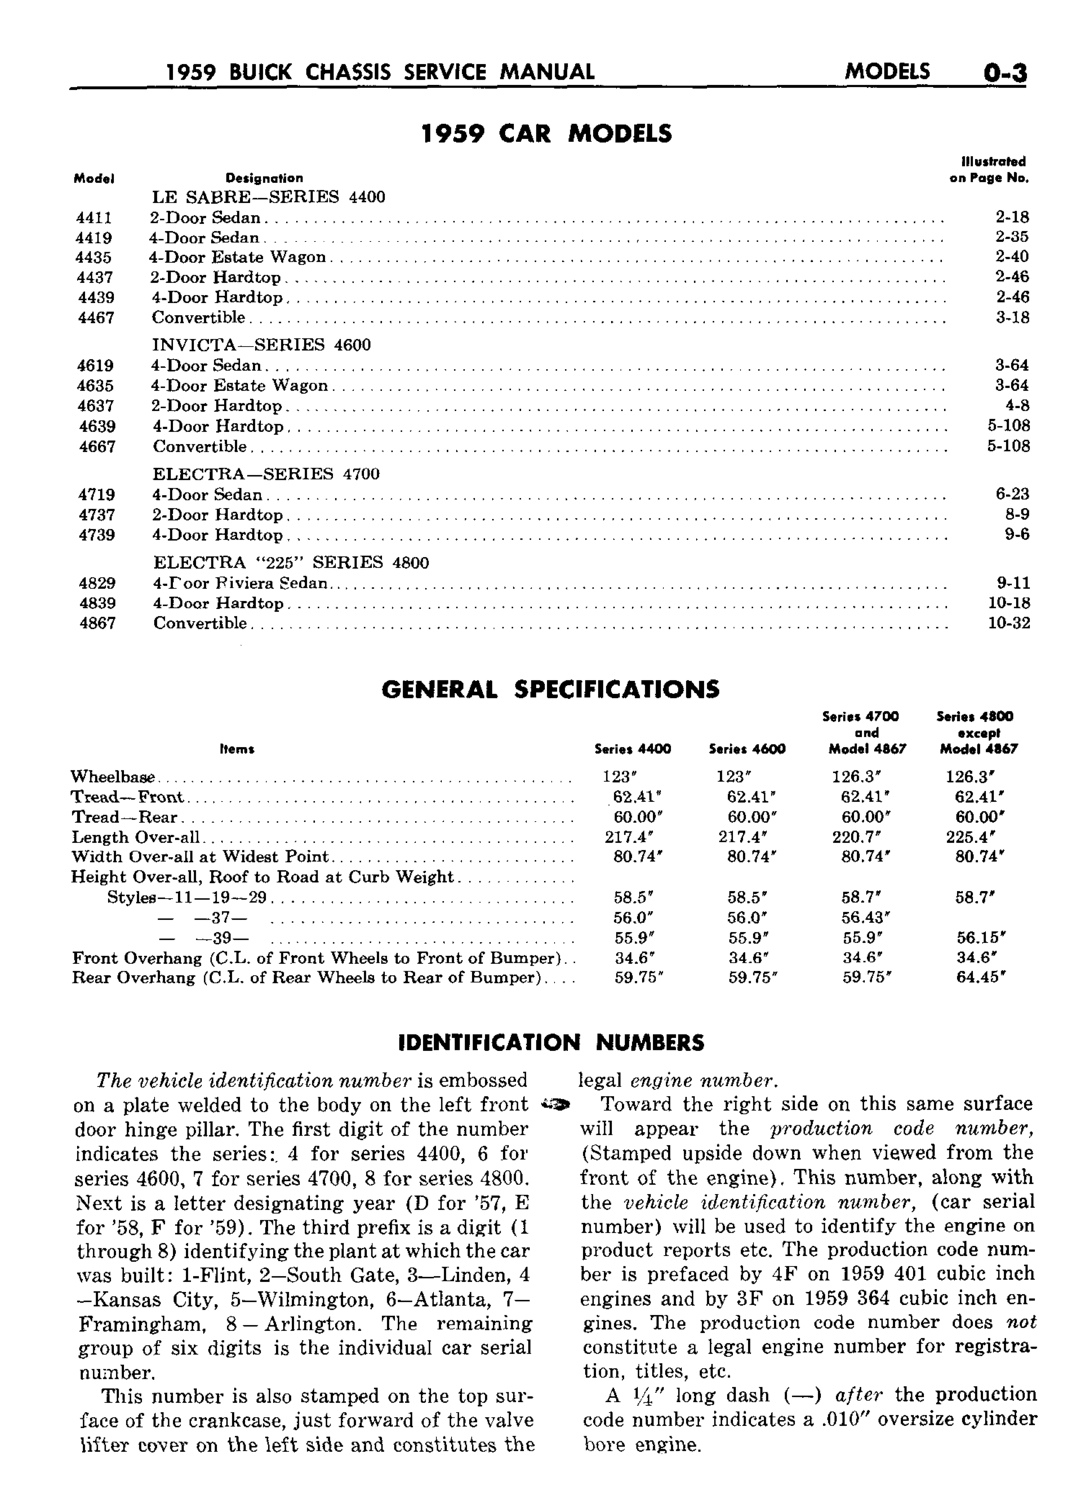 n_01 1959 Buick Shop Manual - Gen Information-005-005.jpg